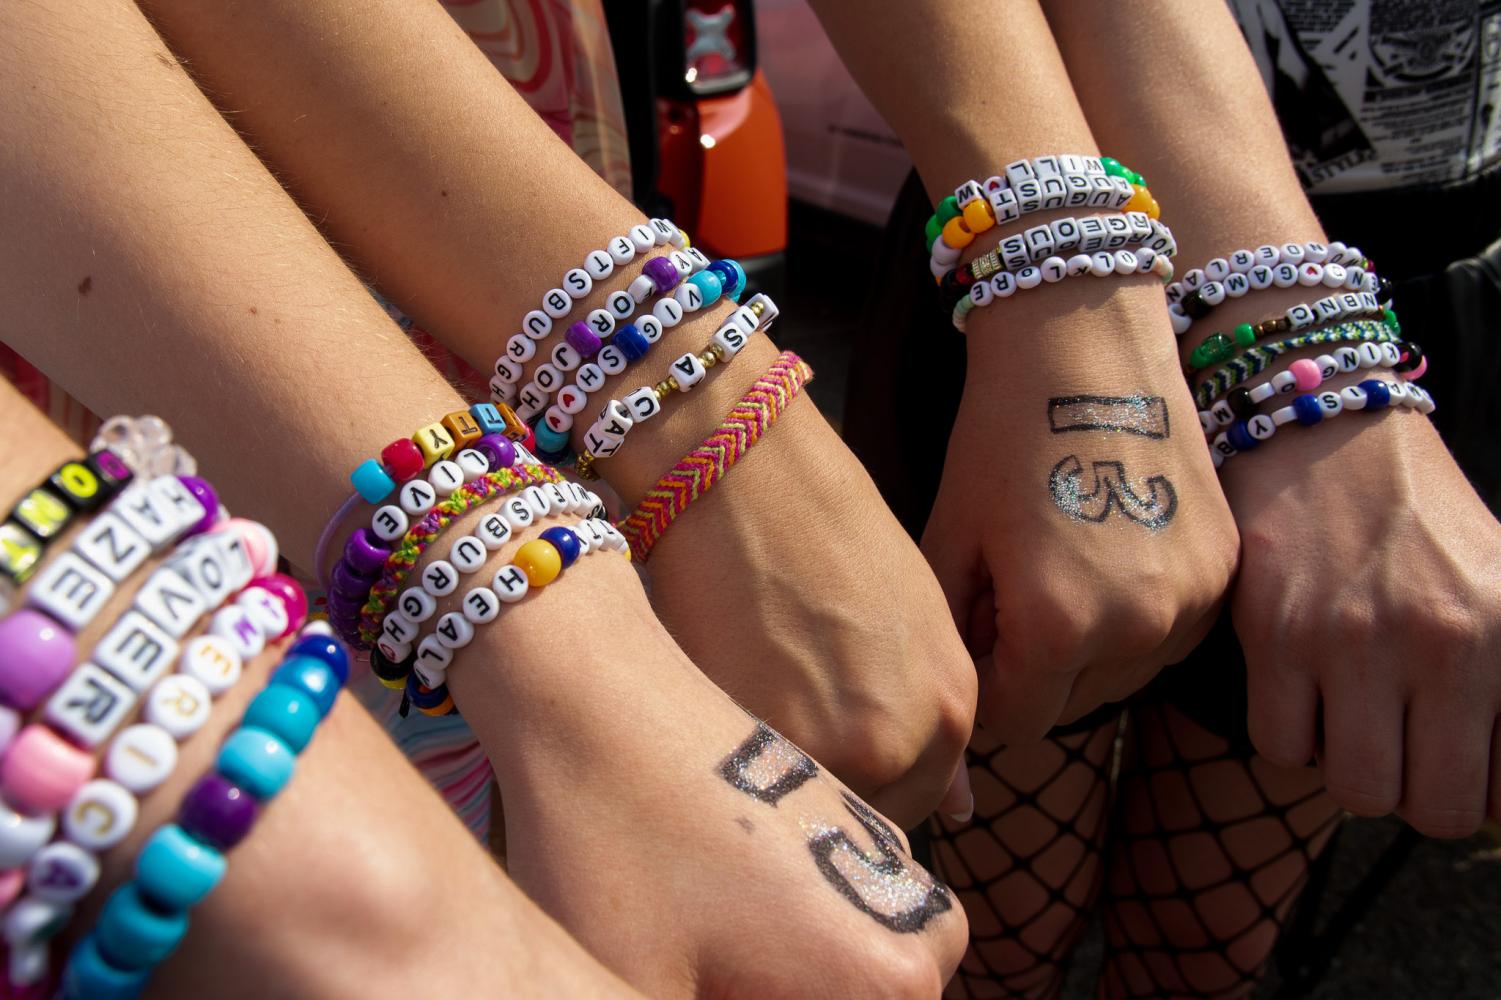 Friendship Bracelets - How Many Is Too Many? : r/TaylorSwift